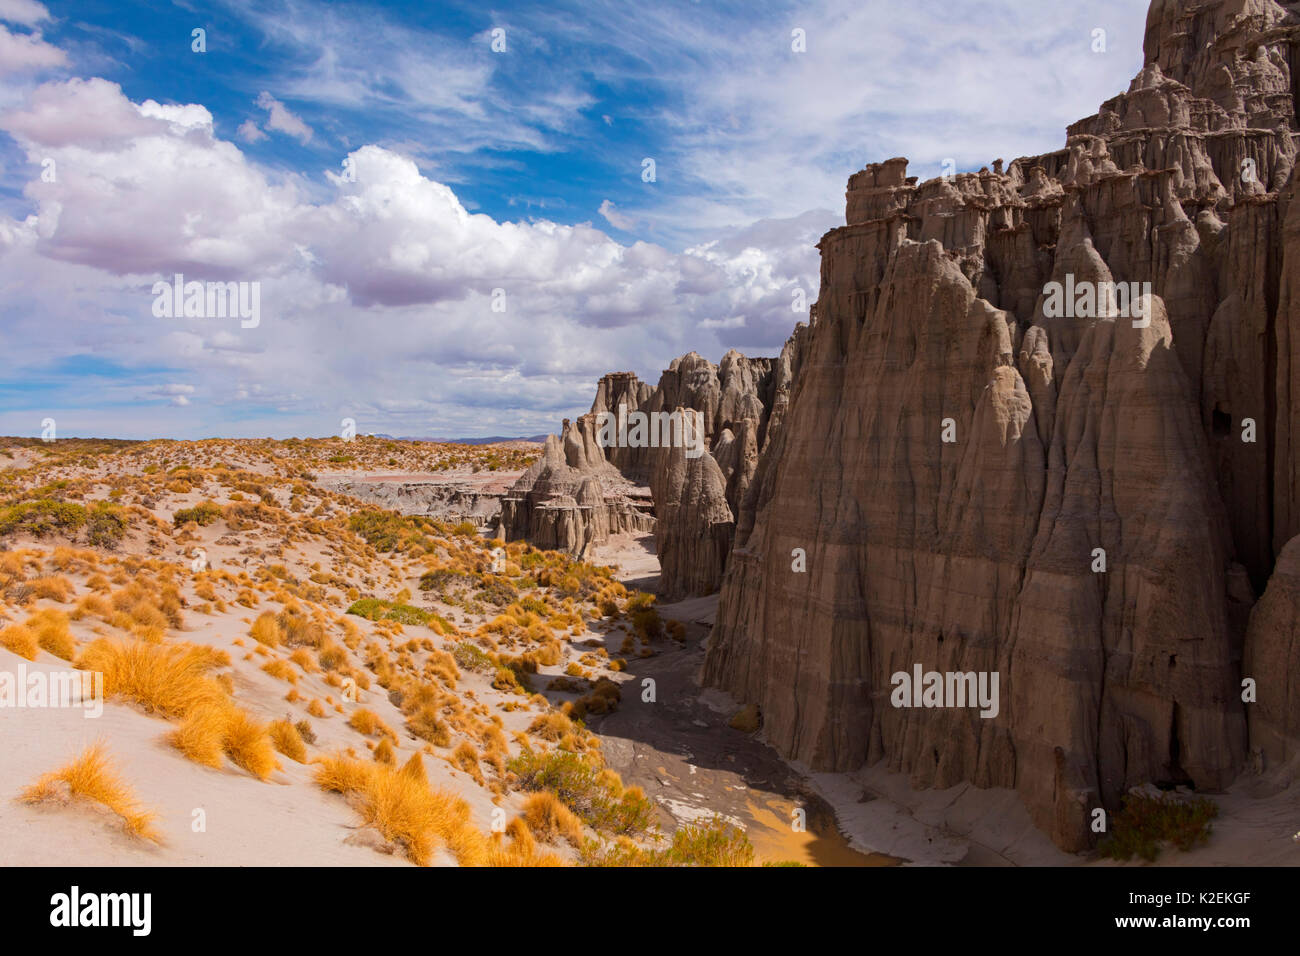 Pinnacles Rock avec herbe Tussock (Festuca orthophylla)., Ciudad del Encanto, Bolivie. Banque D'Images